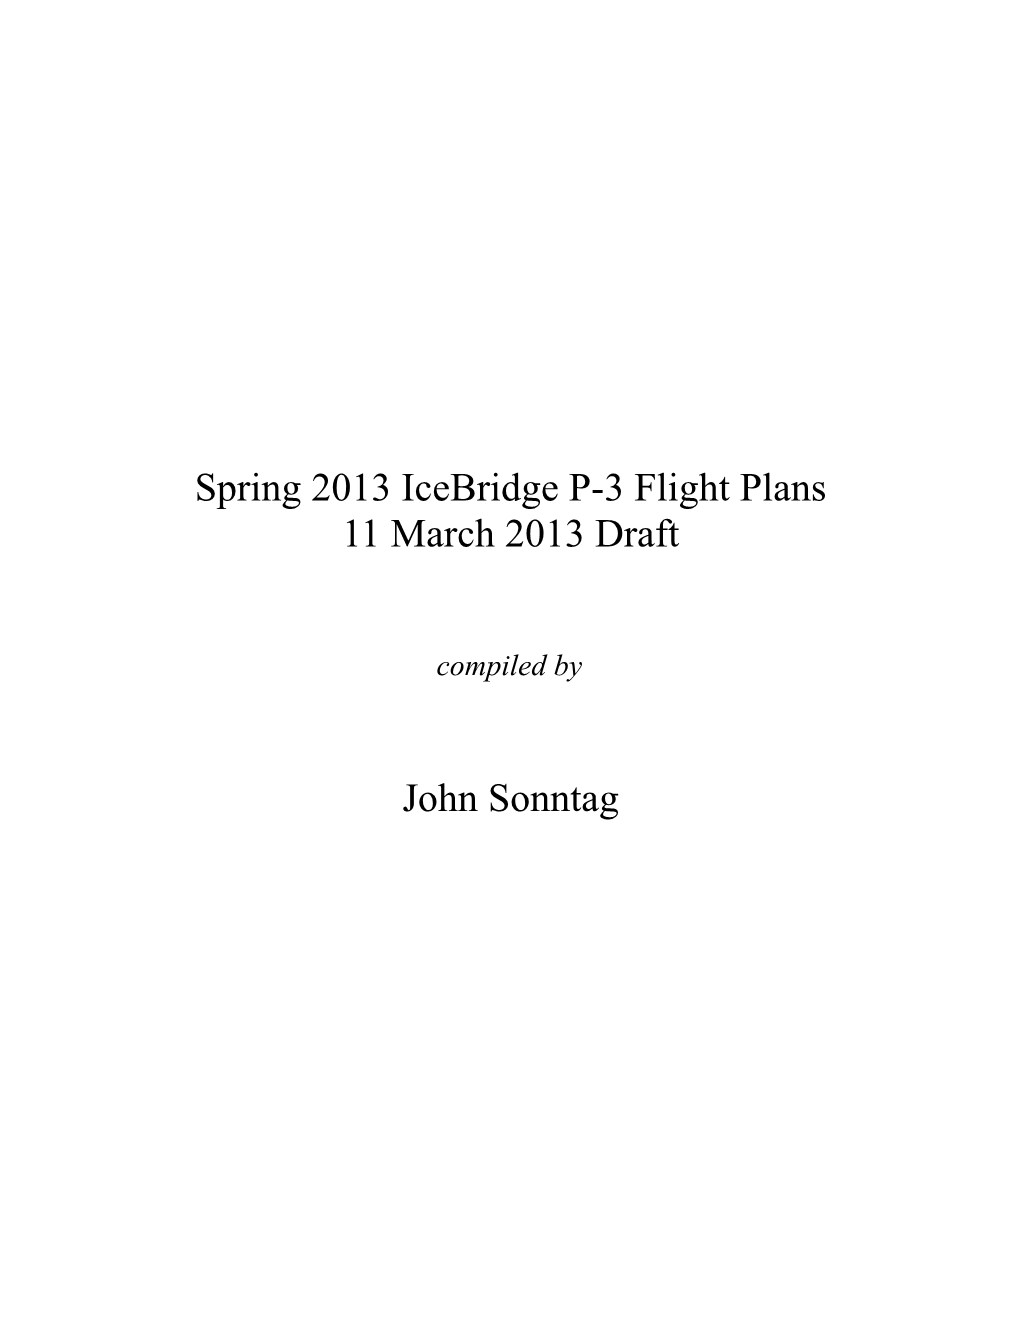 Spring 2013 Icebridge P-3 Flight Plans 11 March 2013 Draft